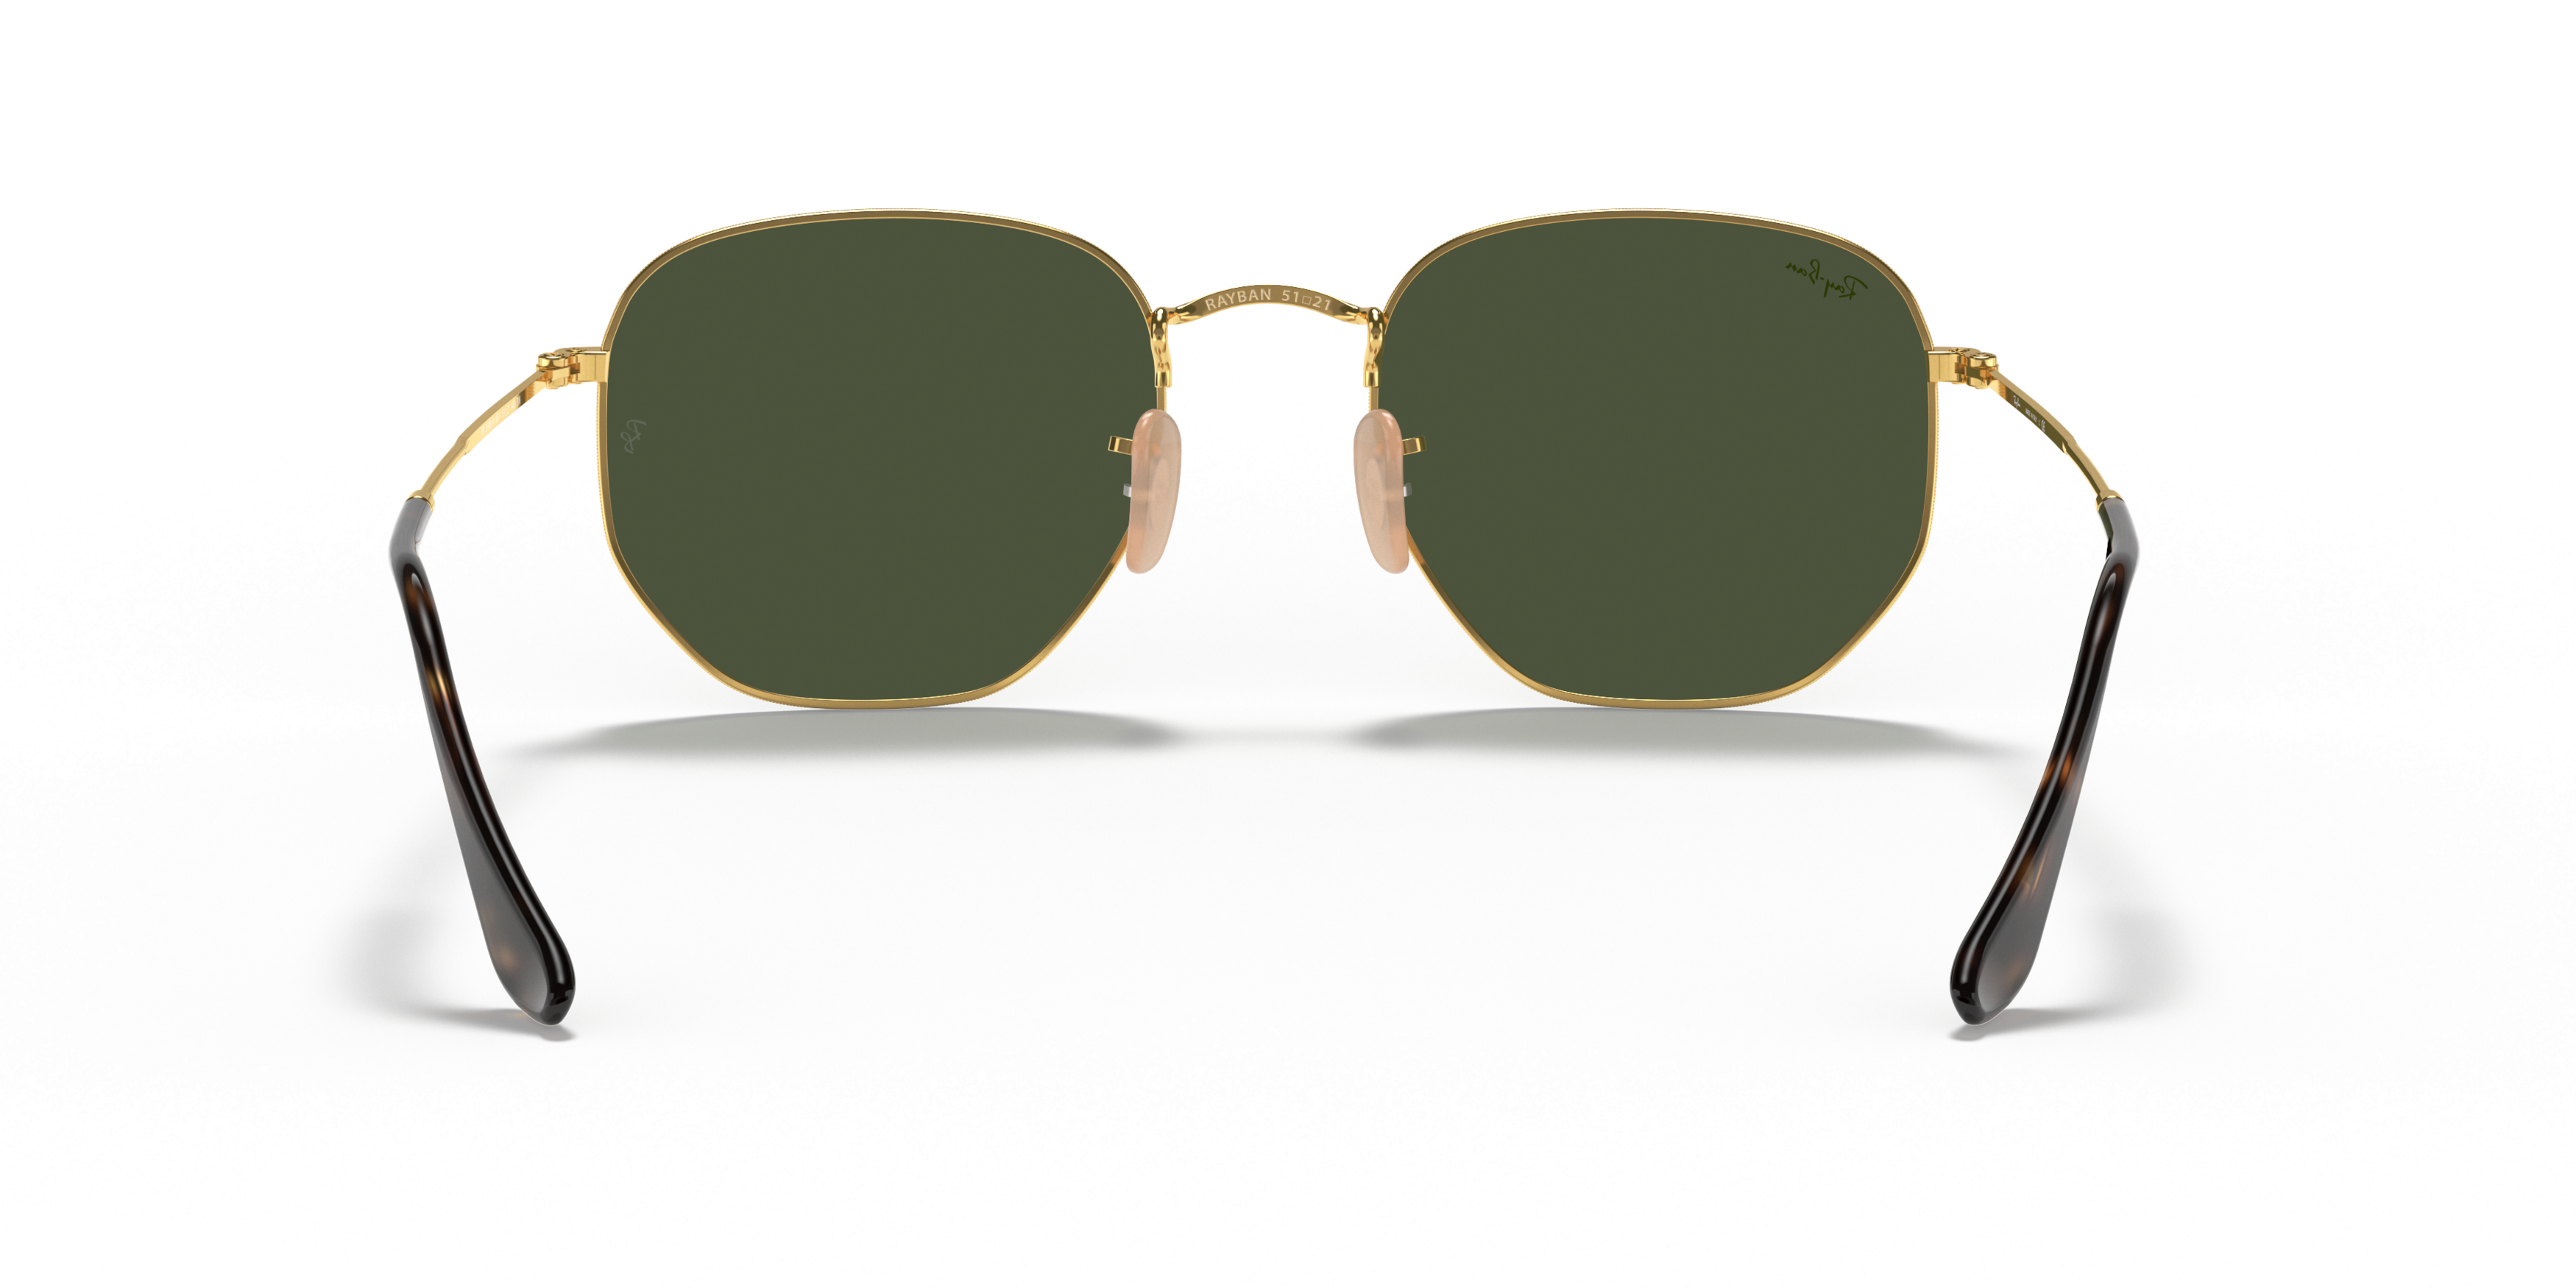 Detail02 Ray-Ban RB 3548N (001) Sunglasses Green / Gold